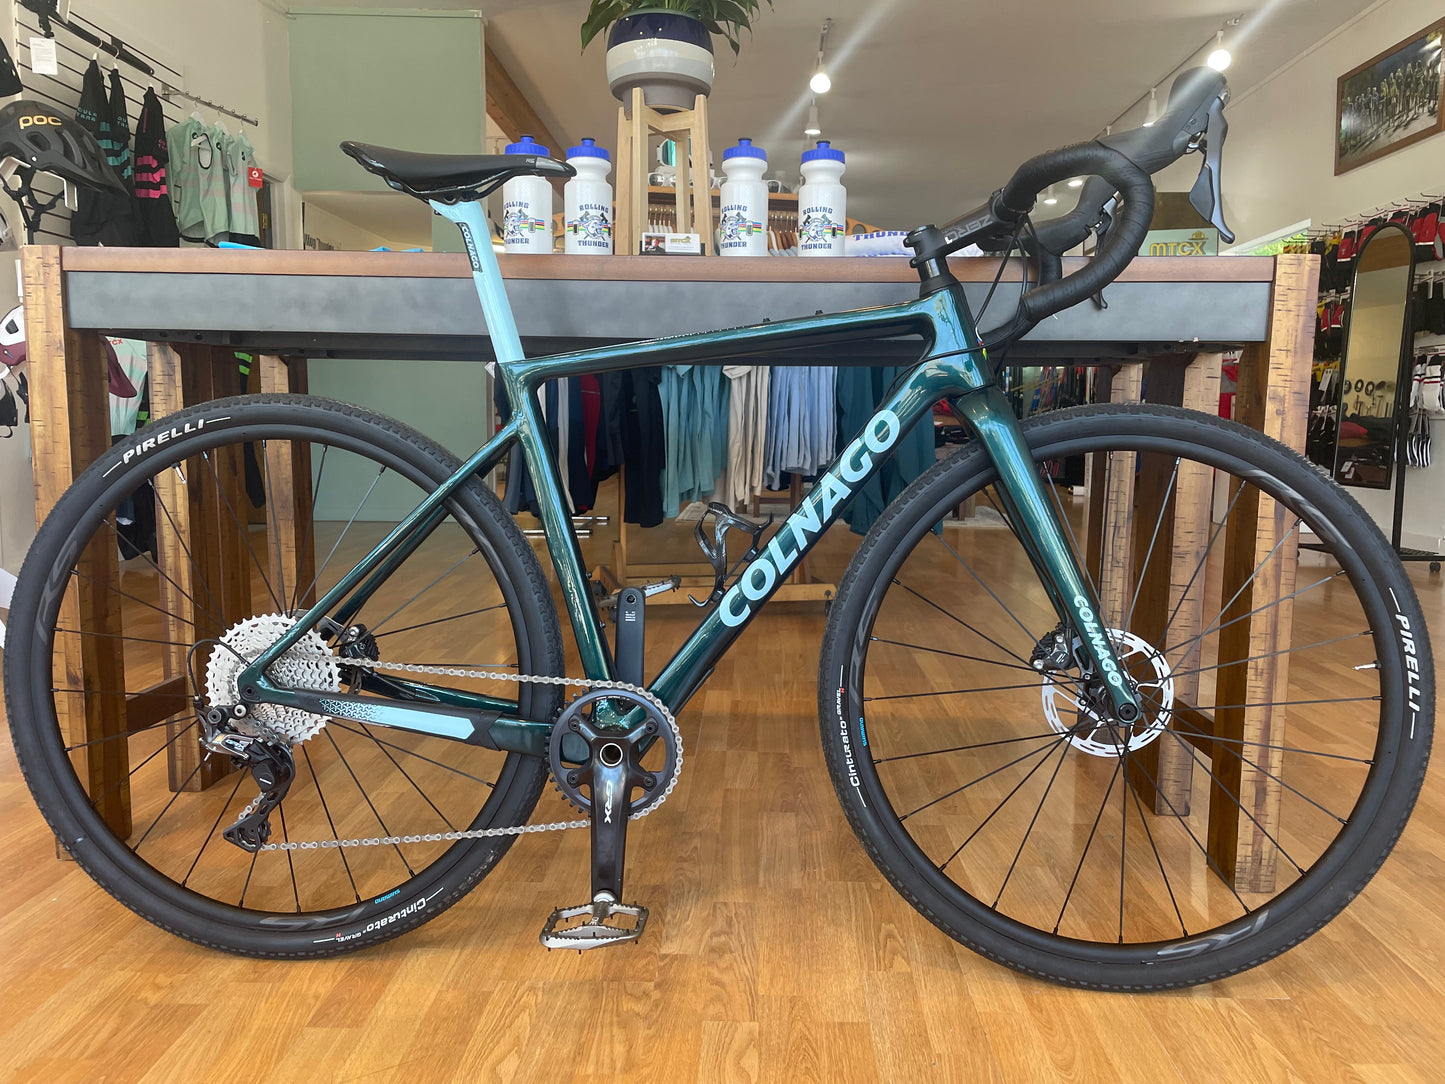 Colnago - size medium - complete bike - $4500